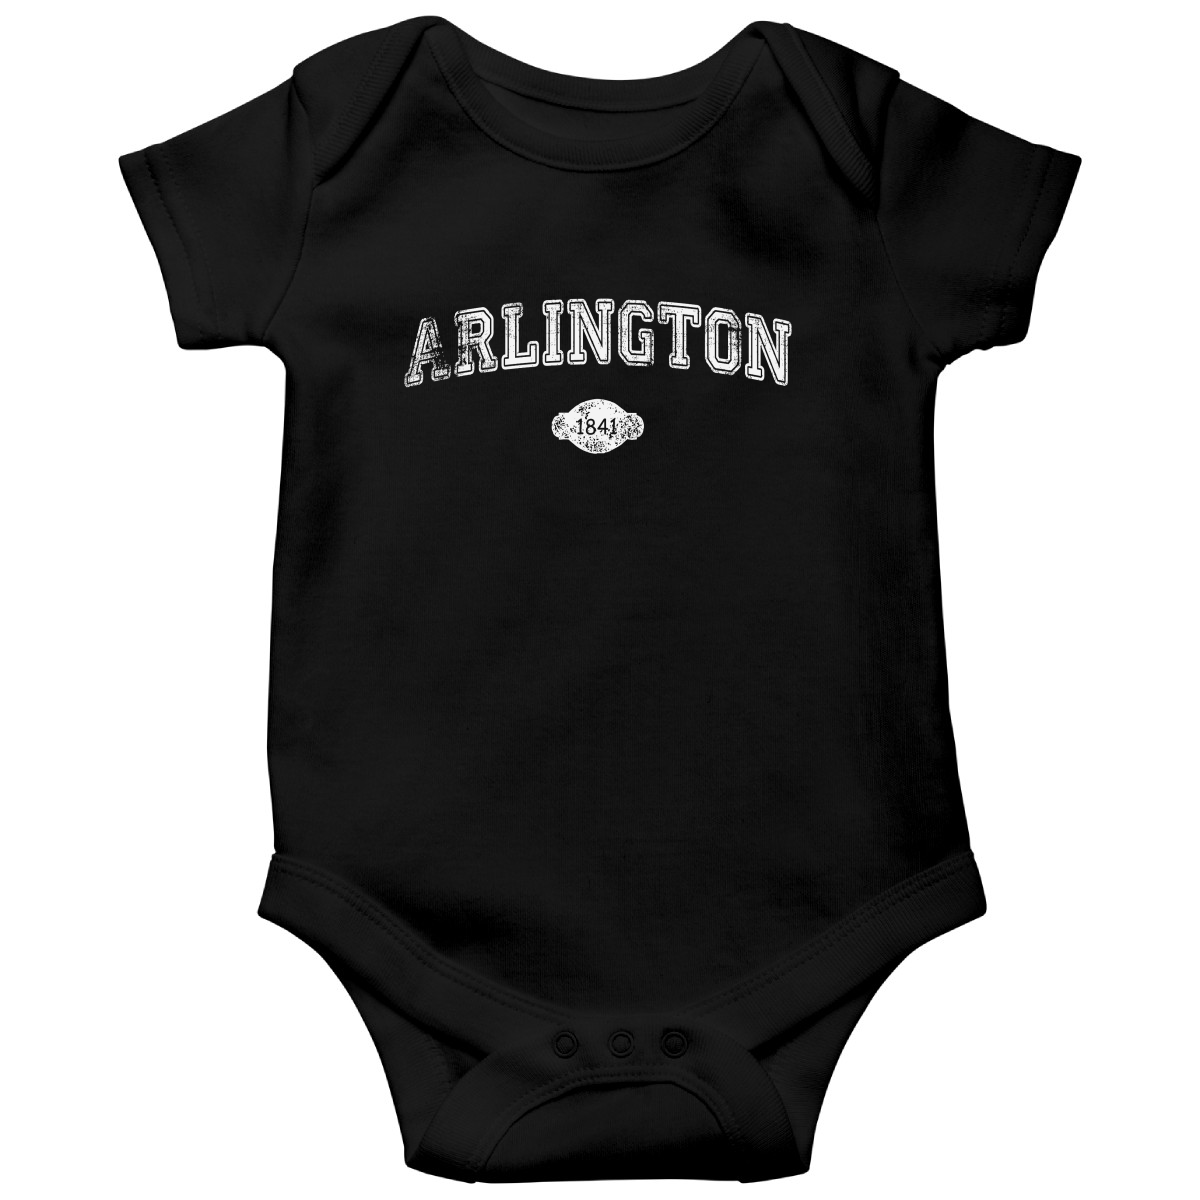 Arlington 1841 Represent Baby Bodysuits | Black